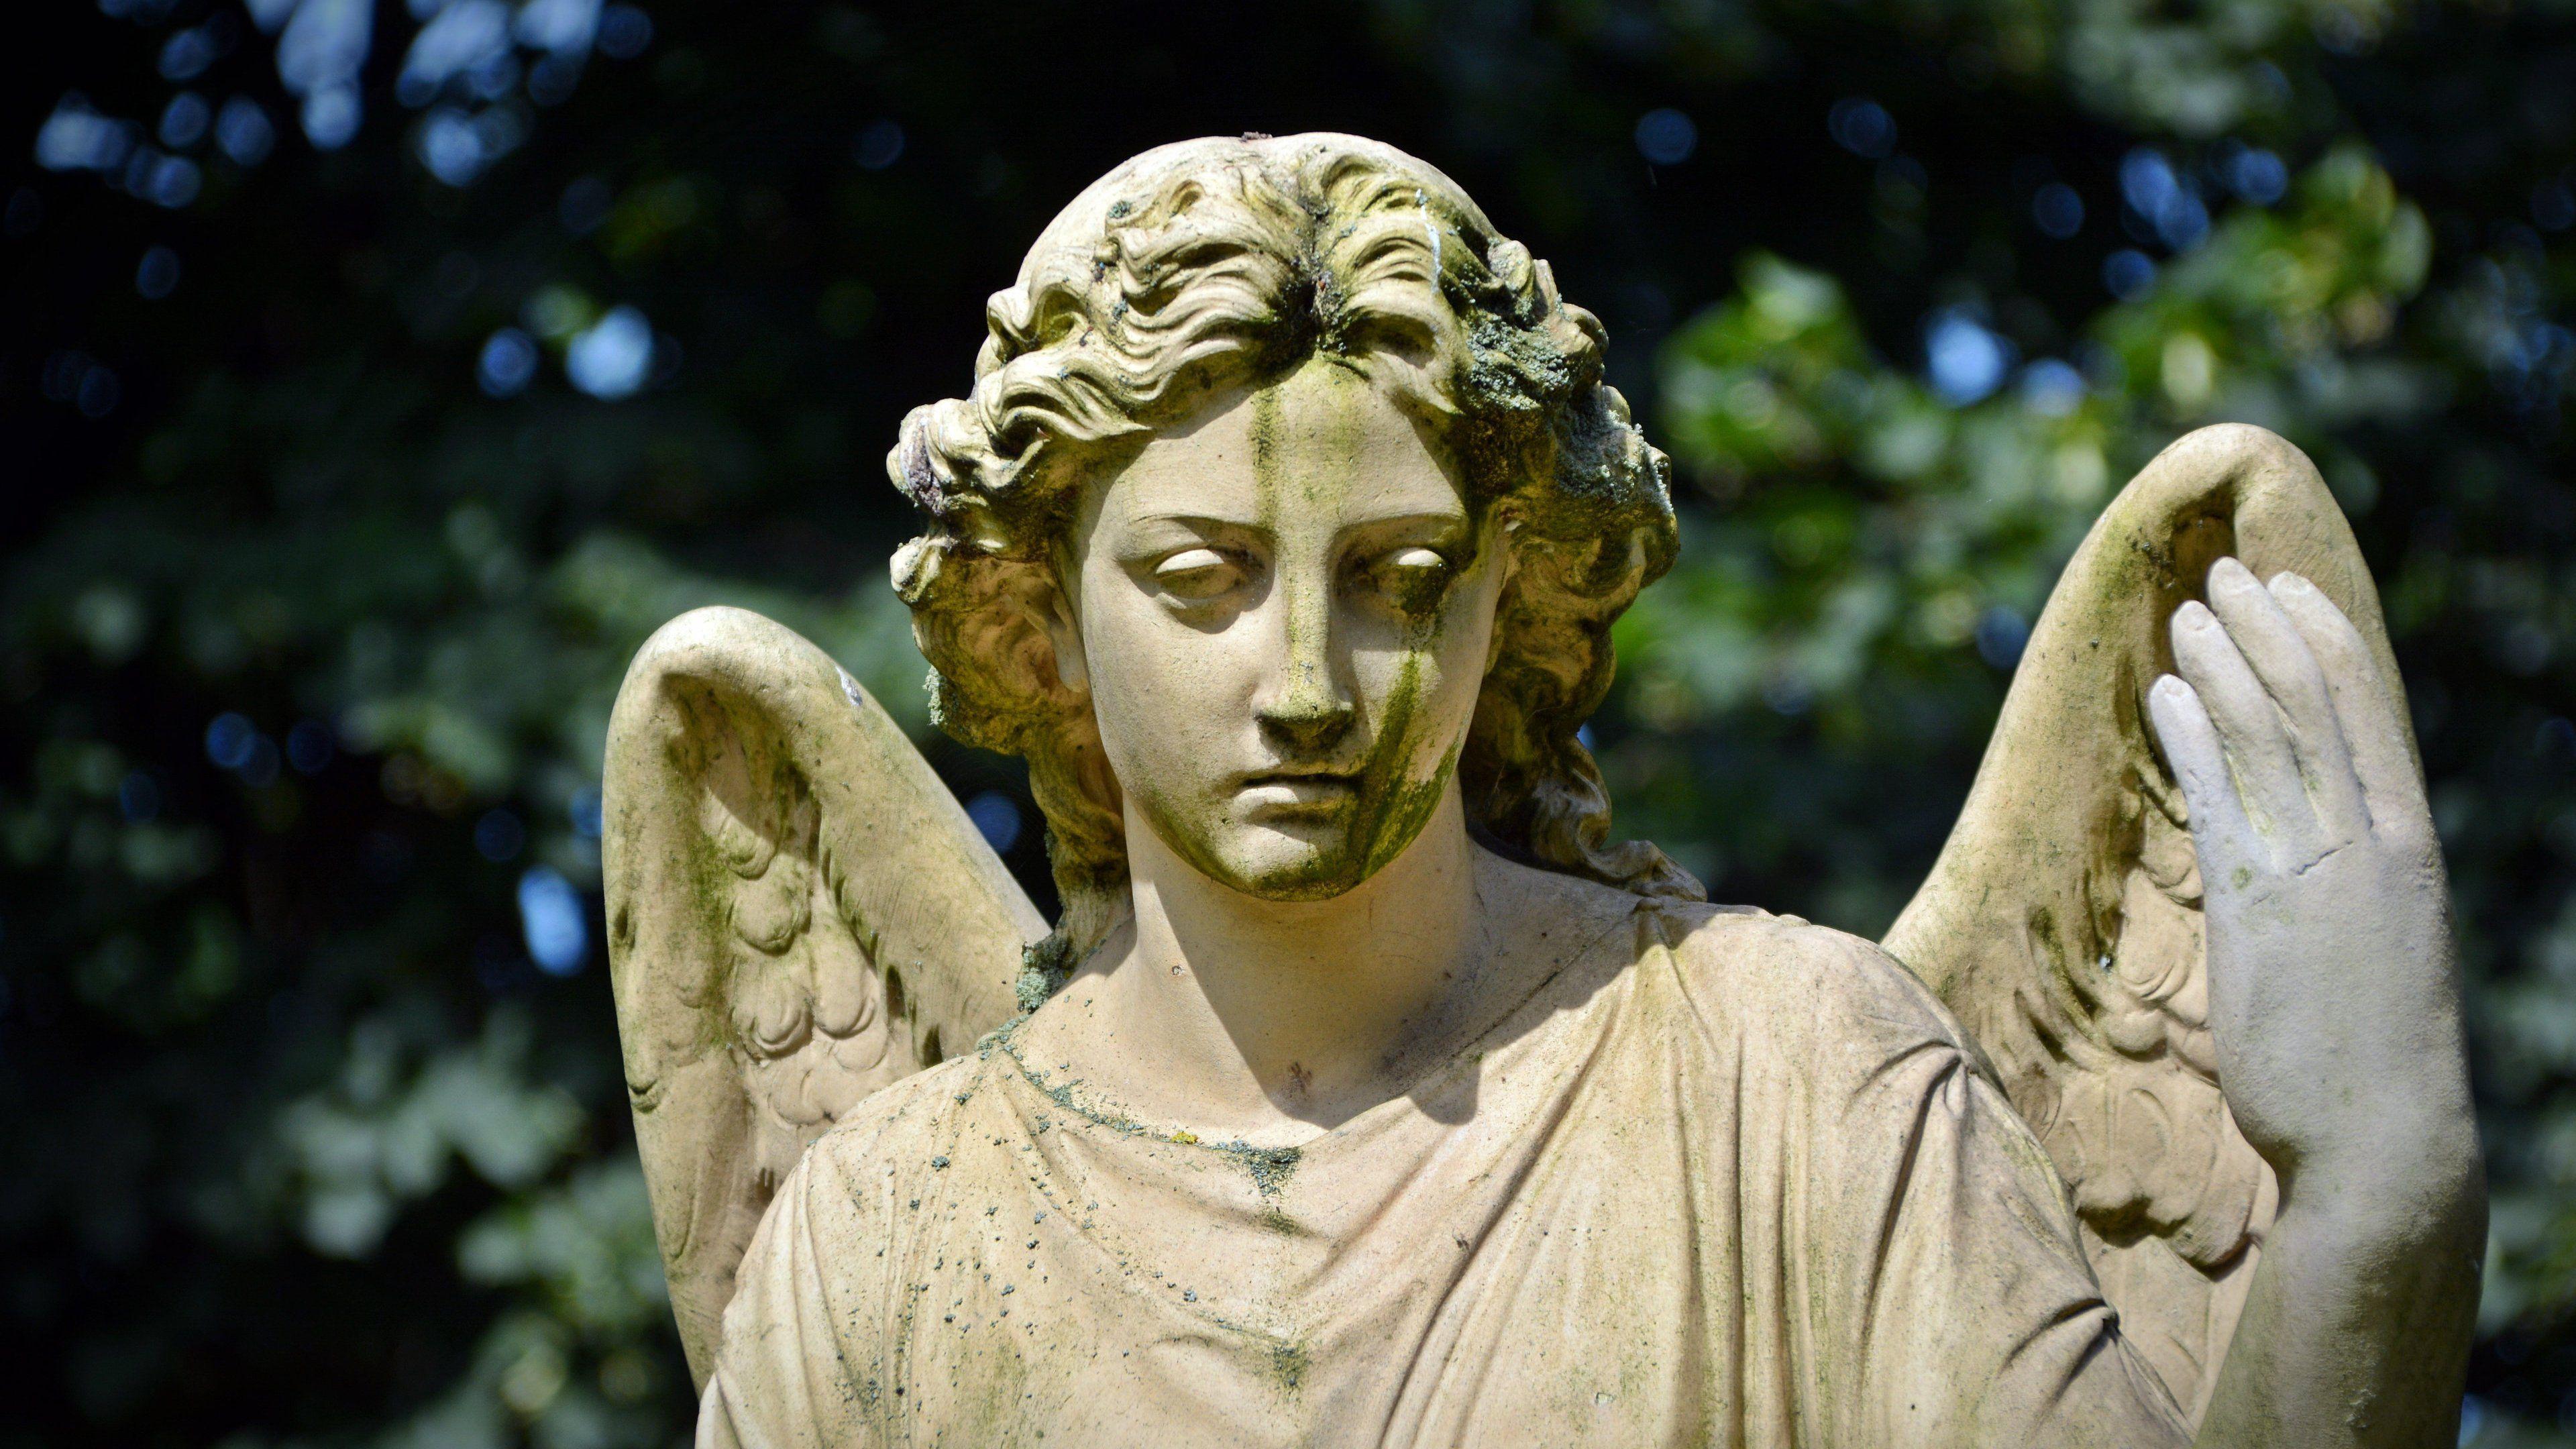 Angel Statue Wallpaper, Android & Desktop Background